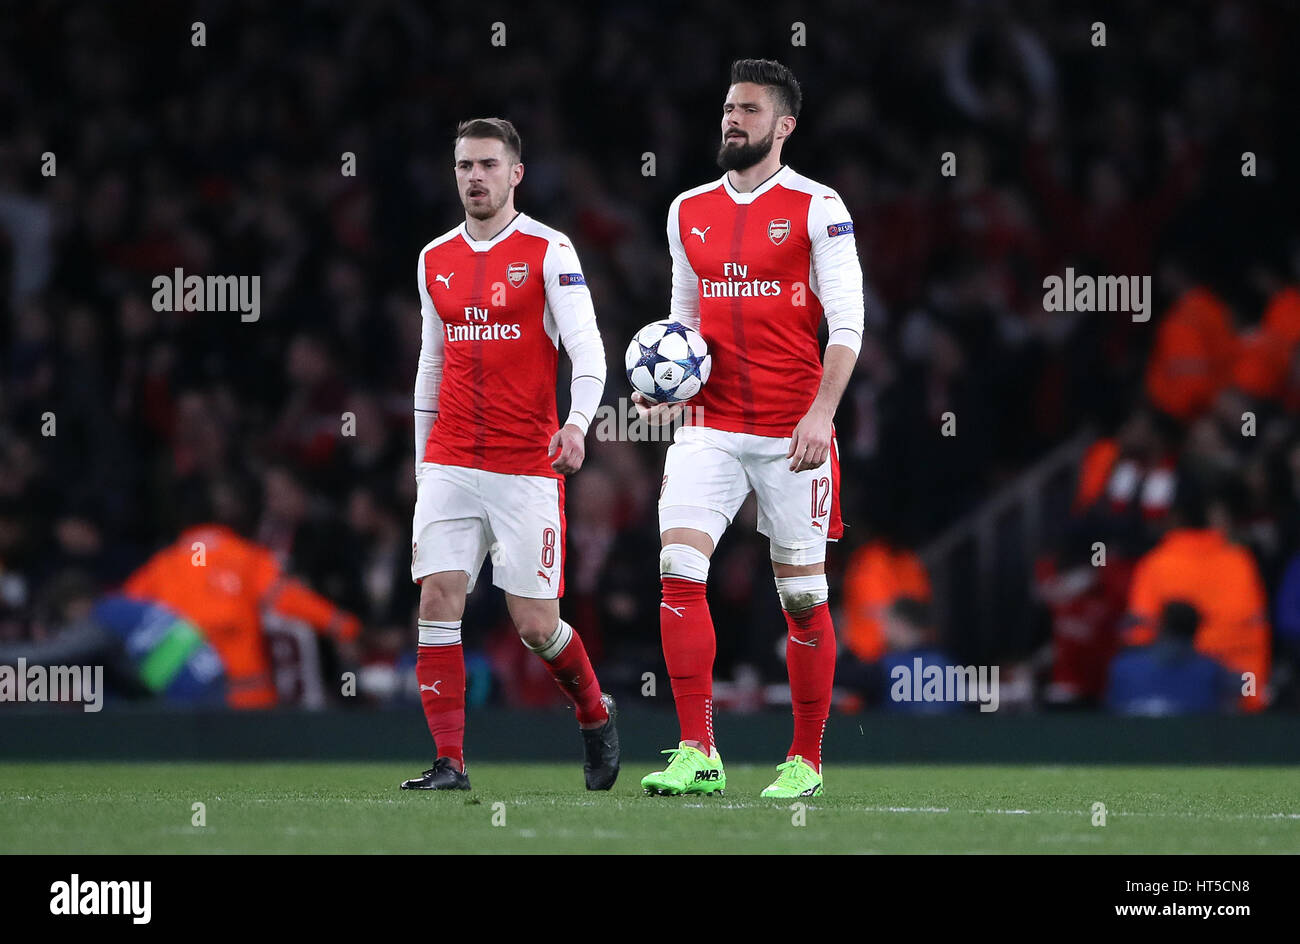 Giroud, Ramsey and Sanchez Model Arsenal FC's 2016 Retro Range